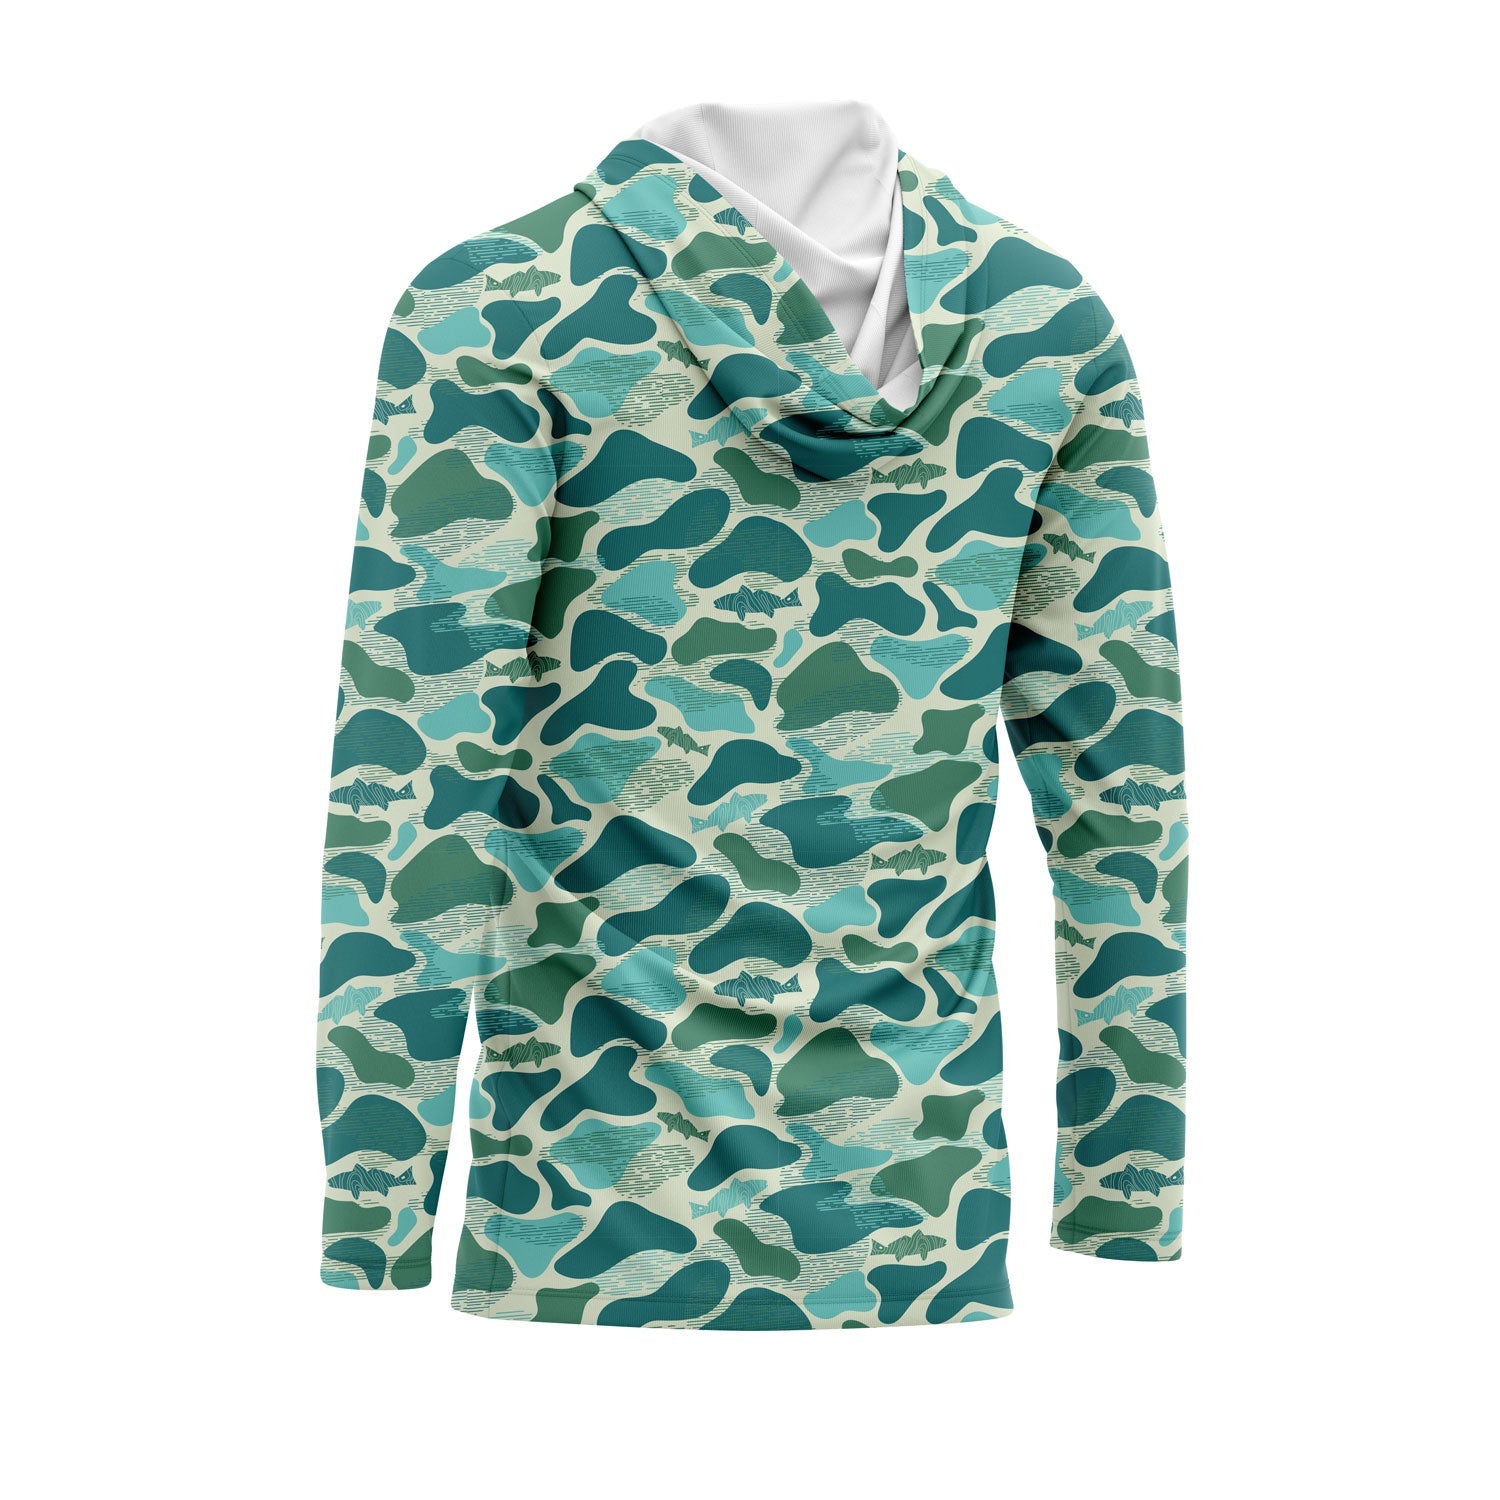 Performance Fishing Hoodie Shirt UPF 50+ (Green Camo), L